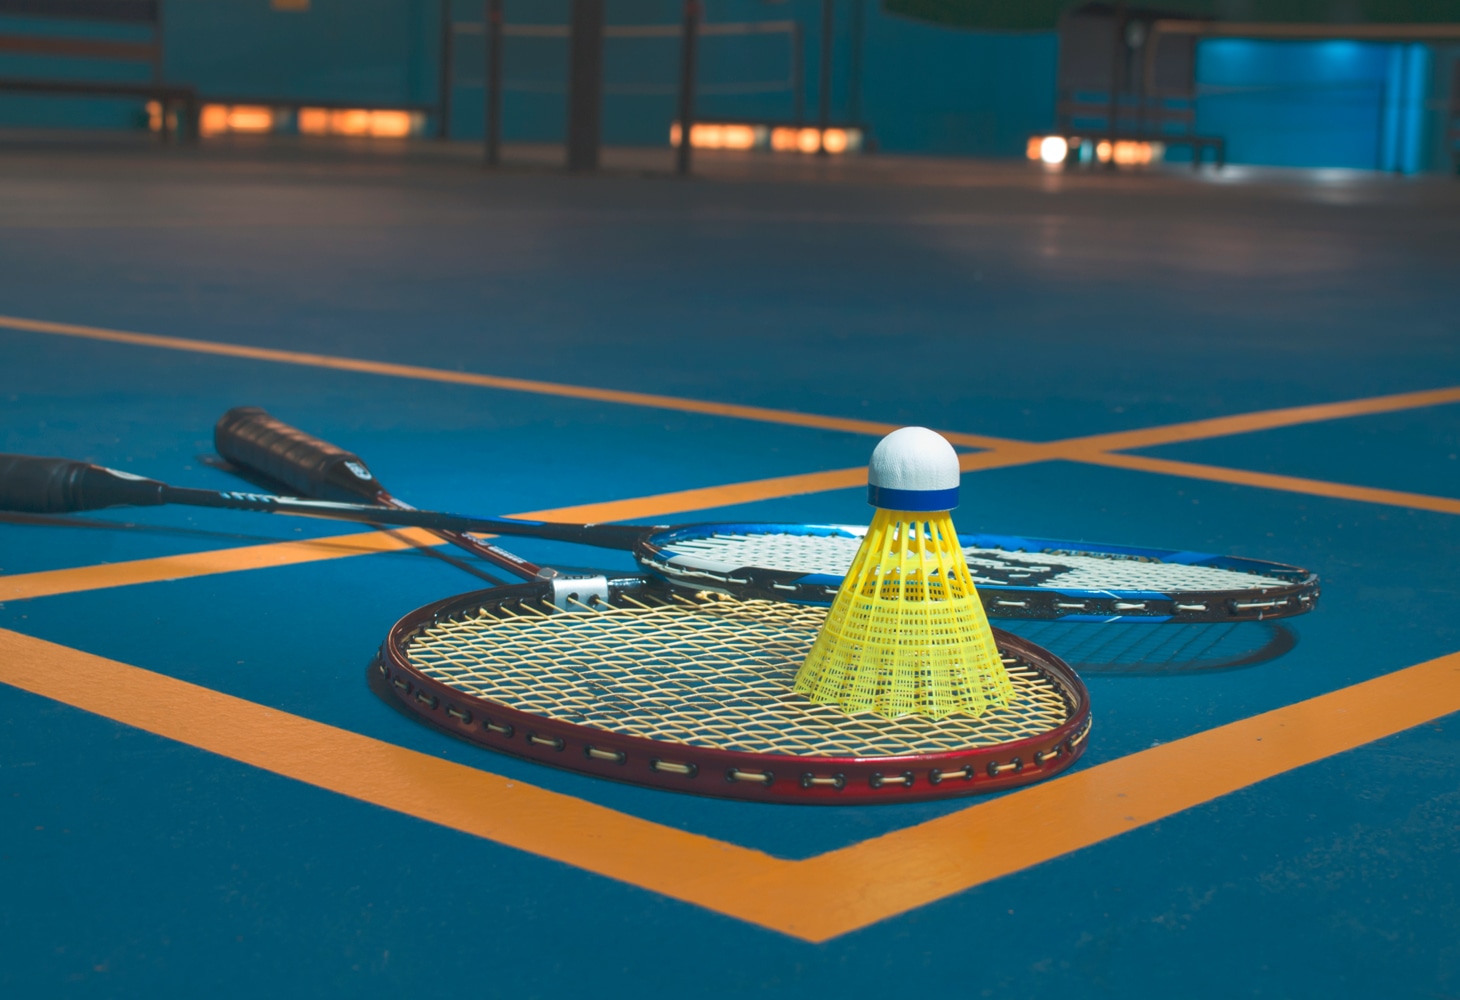 Badminton and Other Indoor Games